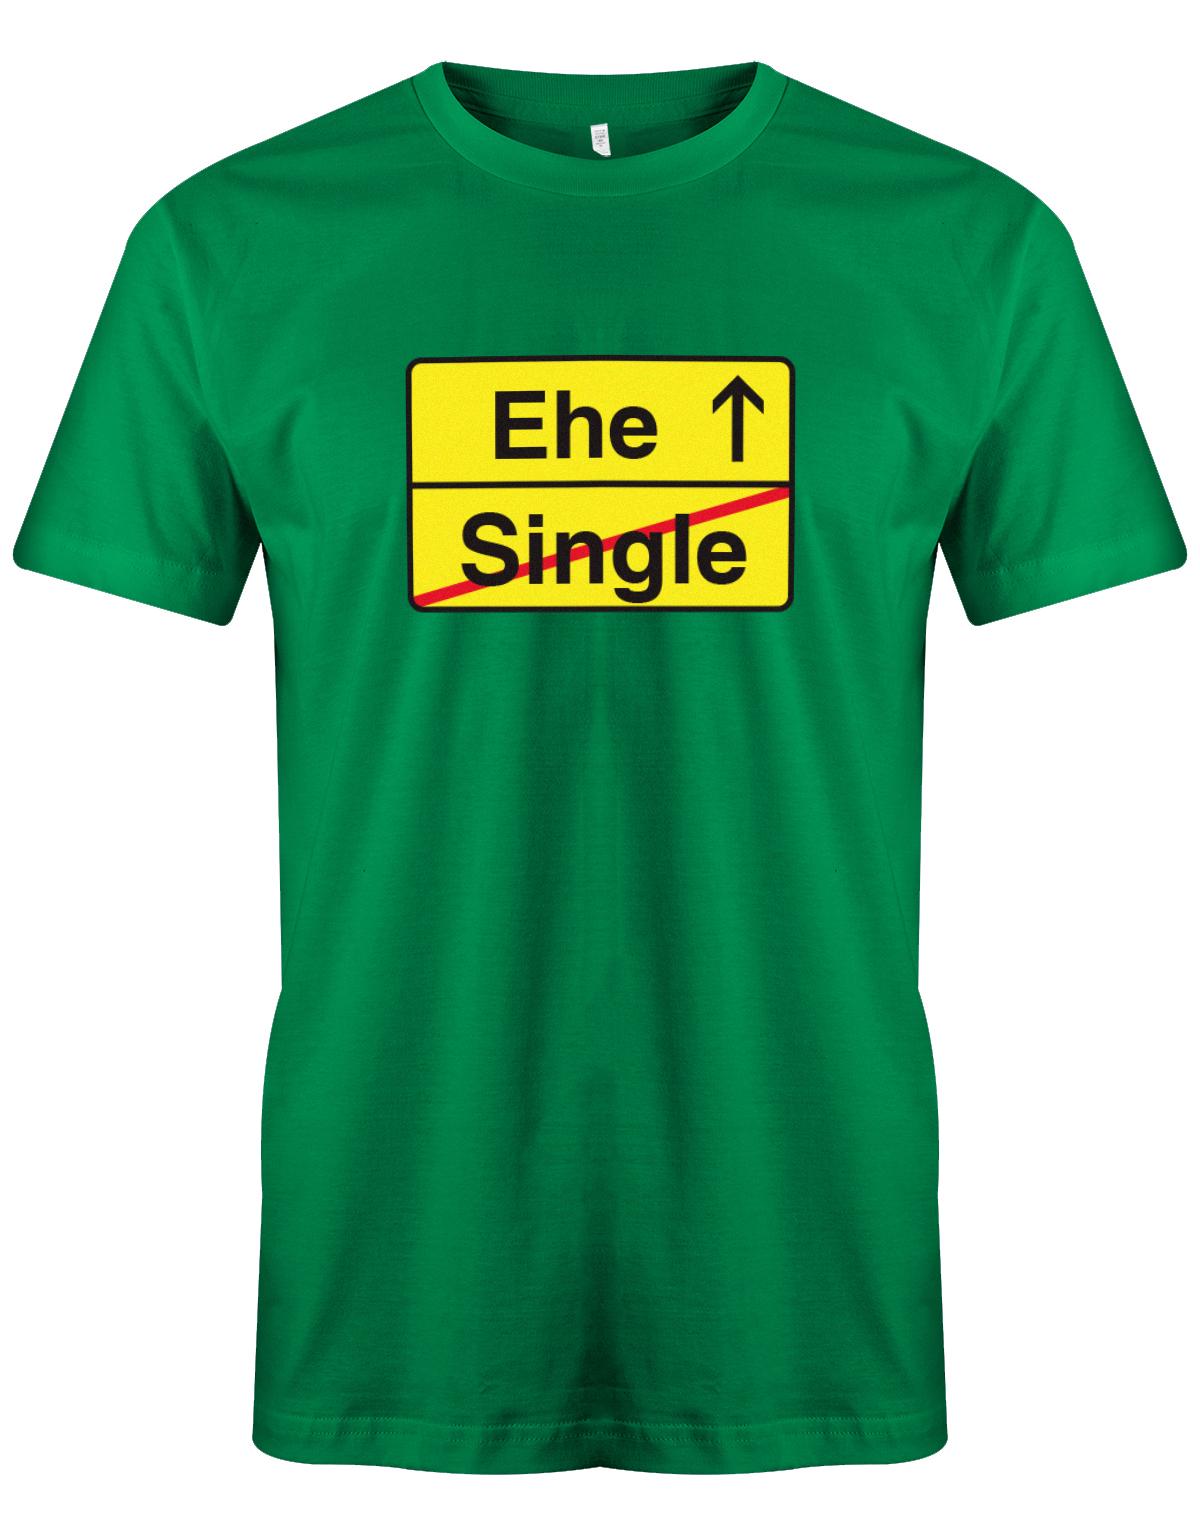 Ehe-Single-JGA-Shirt-Herren-Gr-n